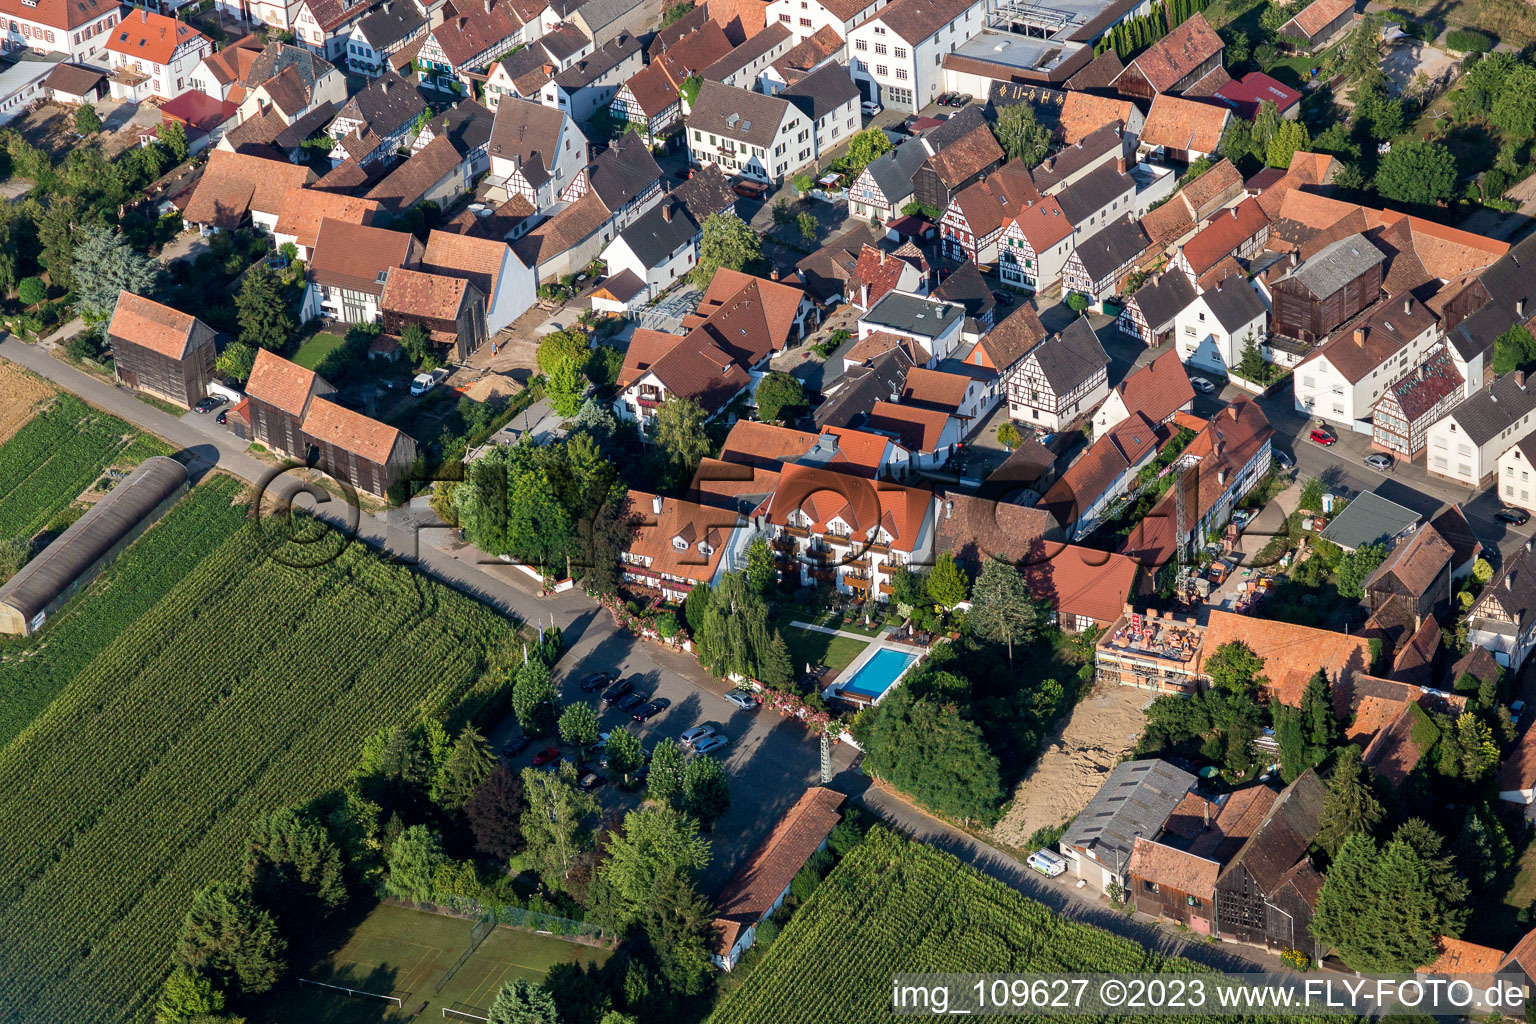 District Hayna in Herxheim bei Landau/Pfalz in the state Rhineland-Palatinate, Germany seen from a drone